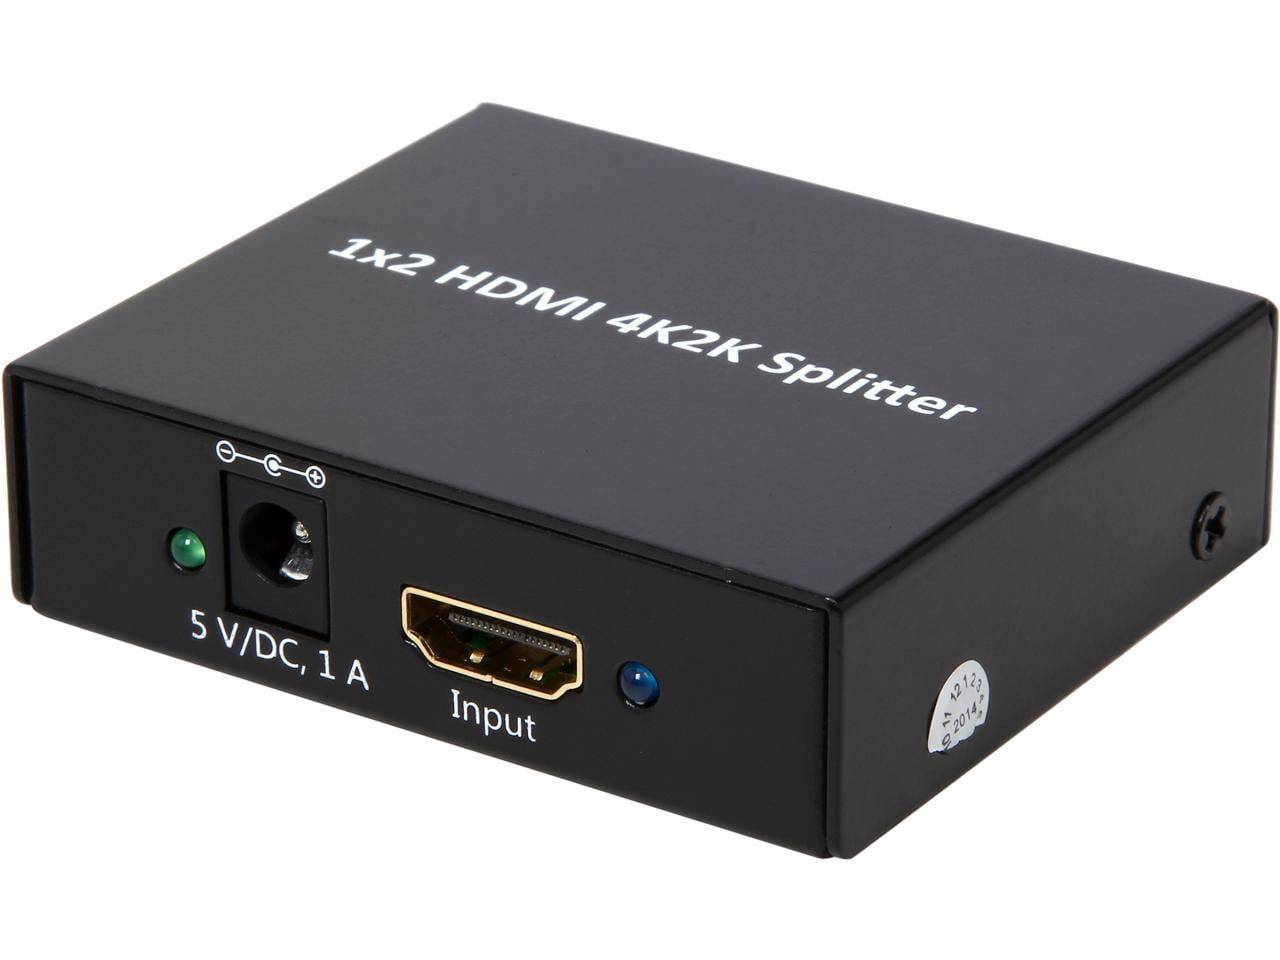 SPLITTER HDMI 1 ENTRADA 2 SALIDAS PR-SP102(4K) PROVISION - FullAlarms